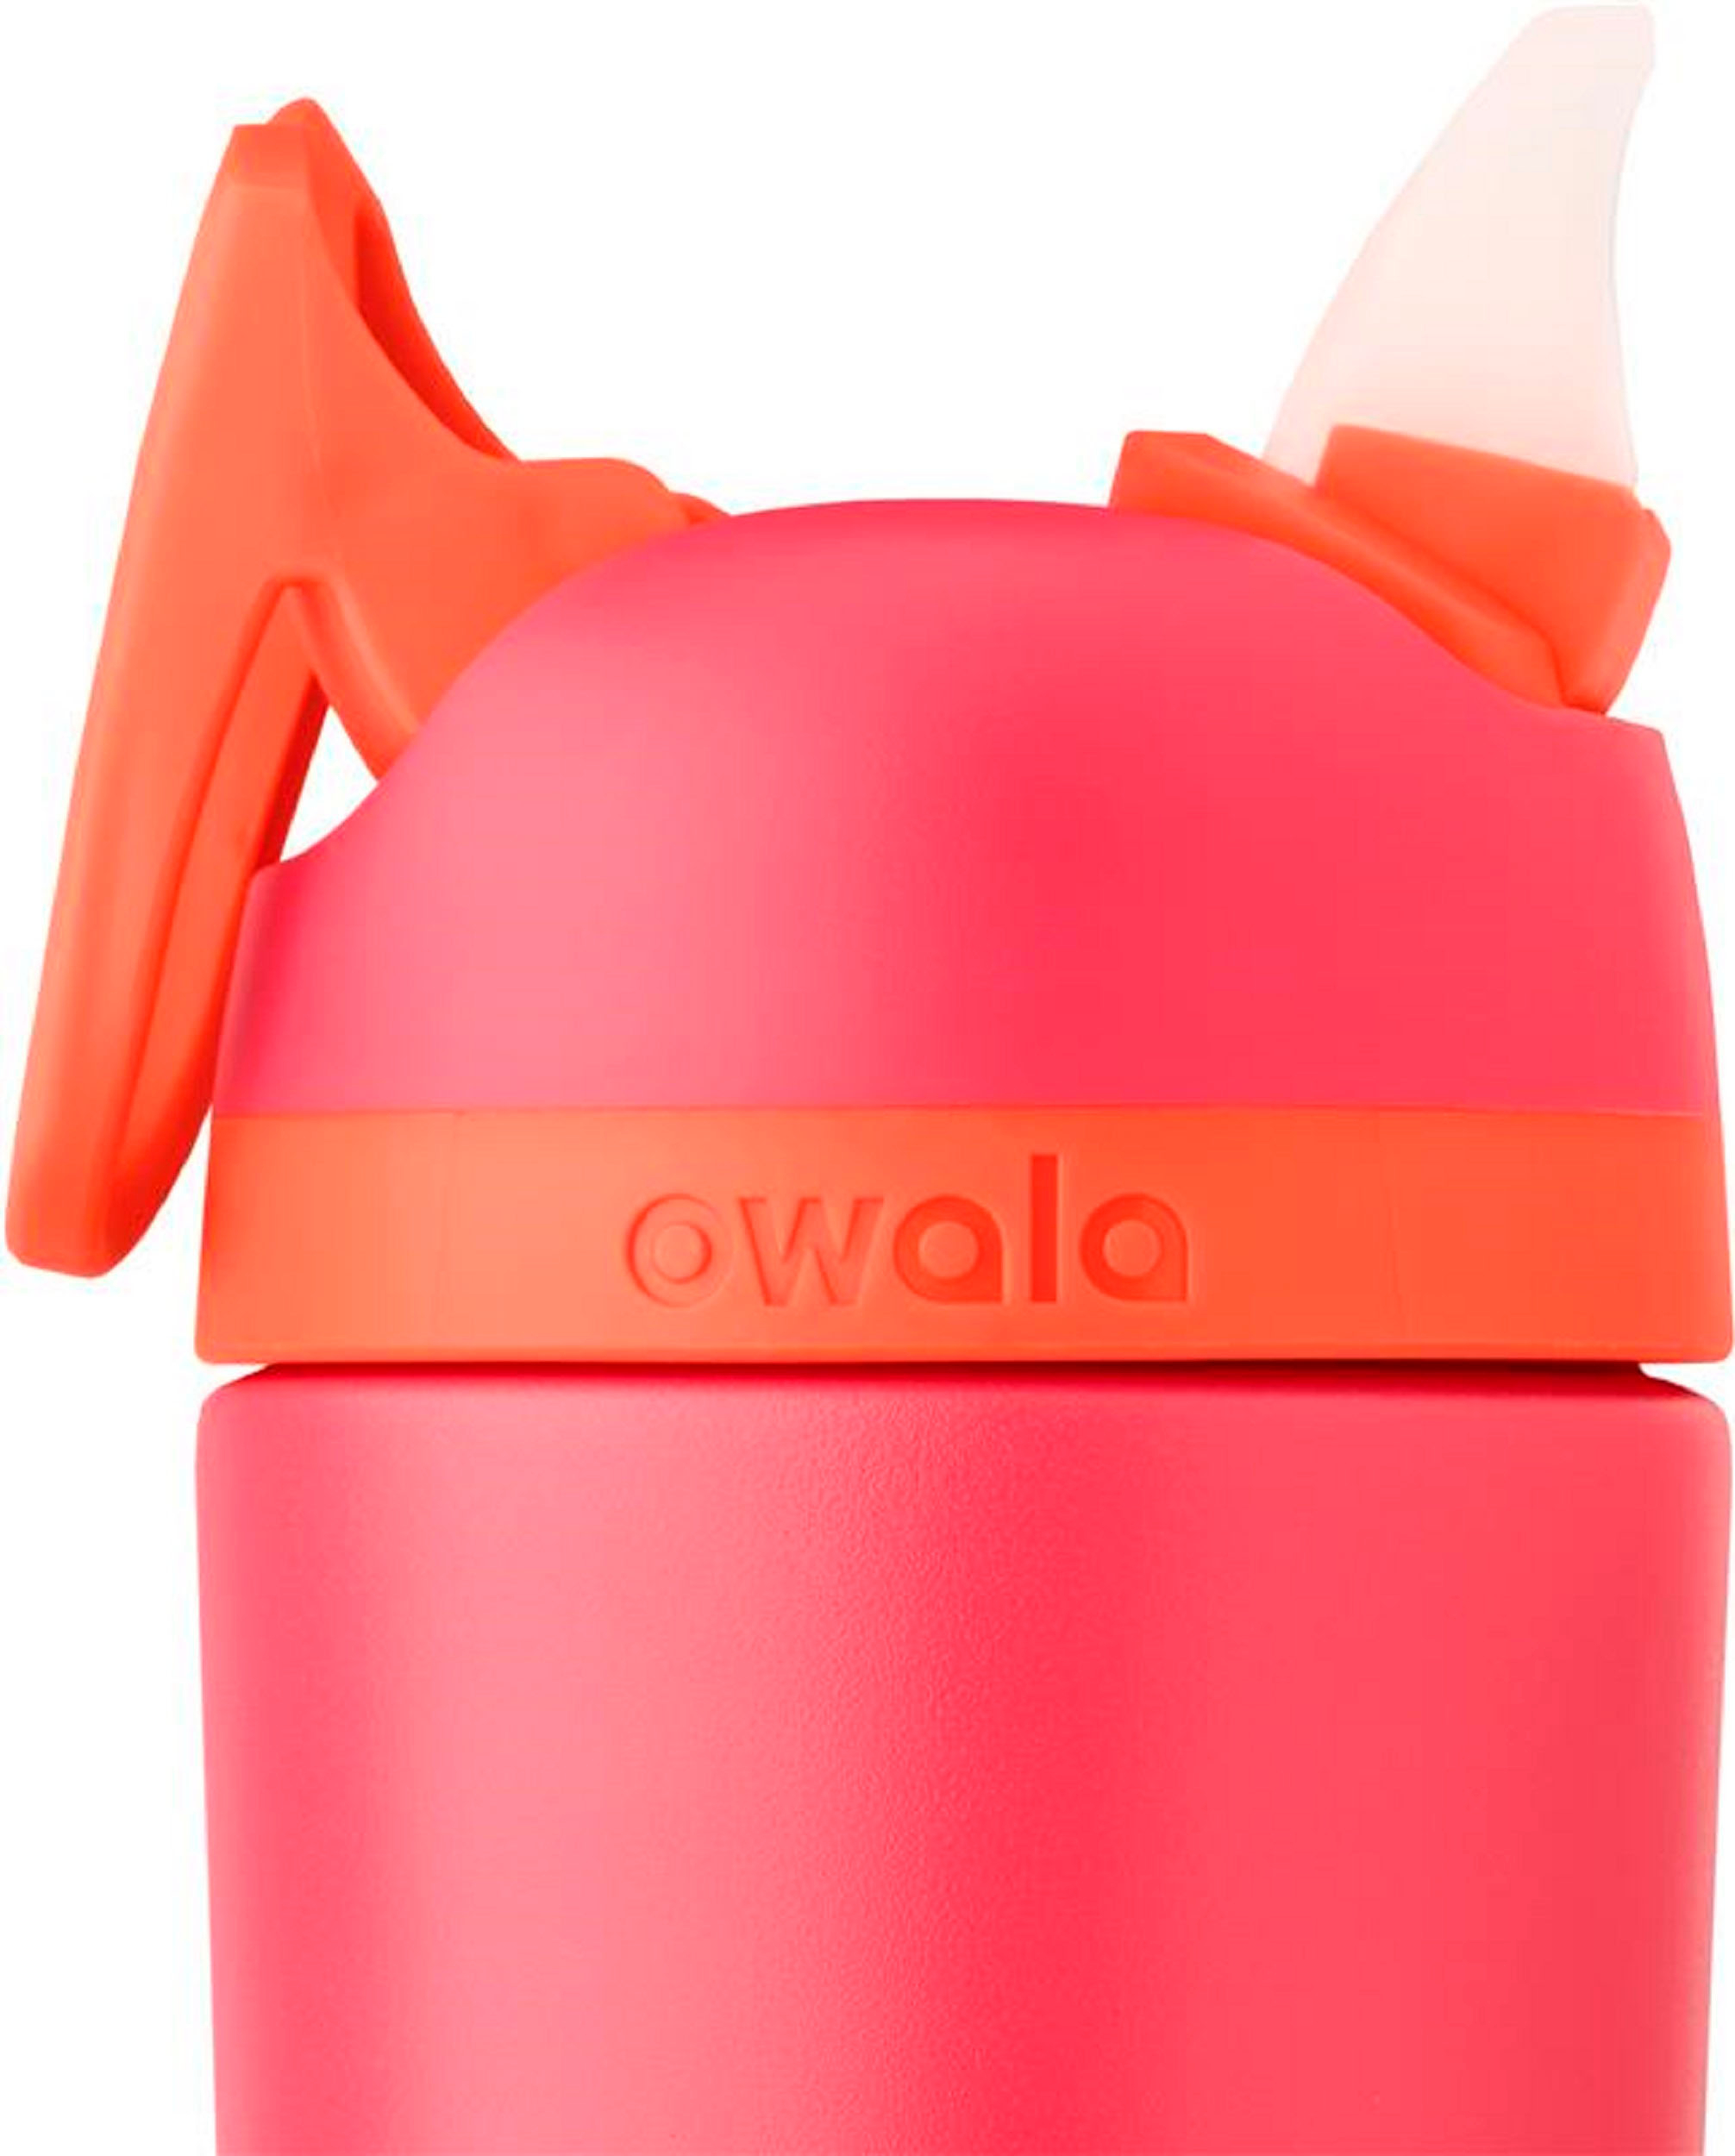 Owala Kids' Stainless Steel Flip - Pink - 14 oz